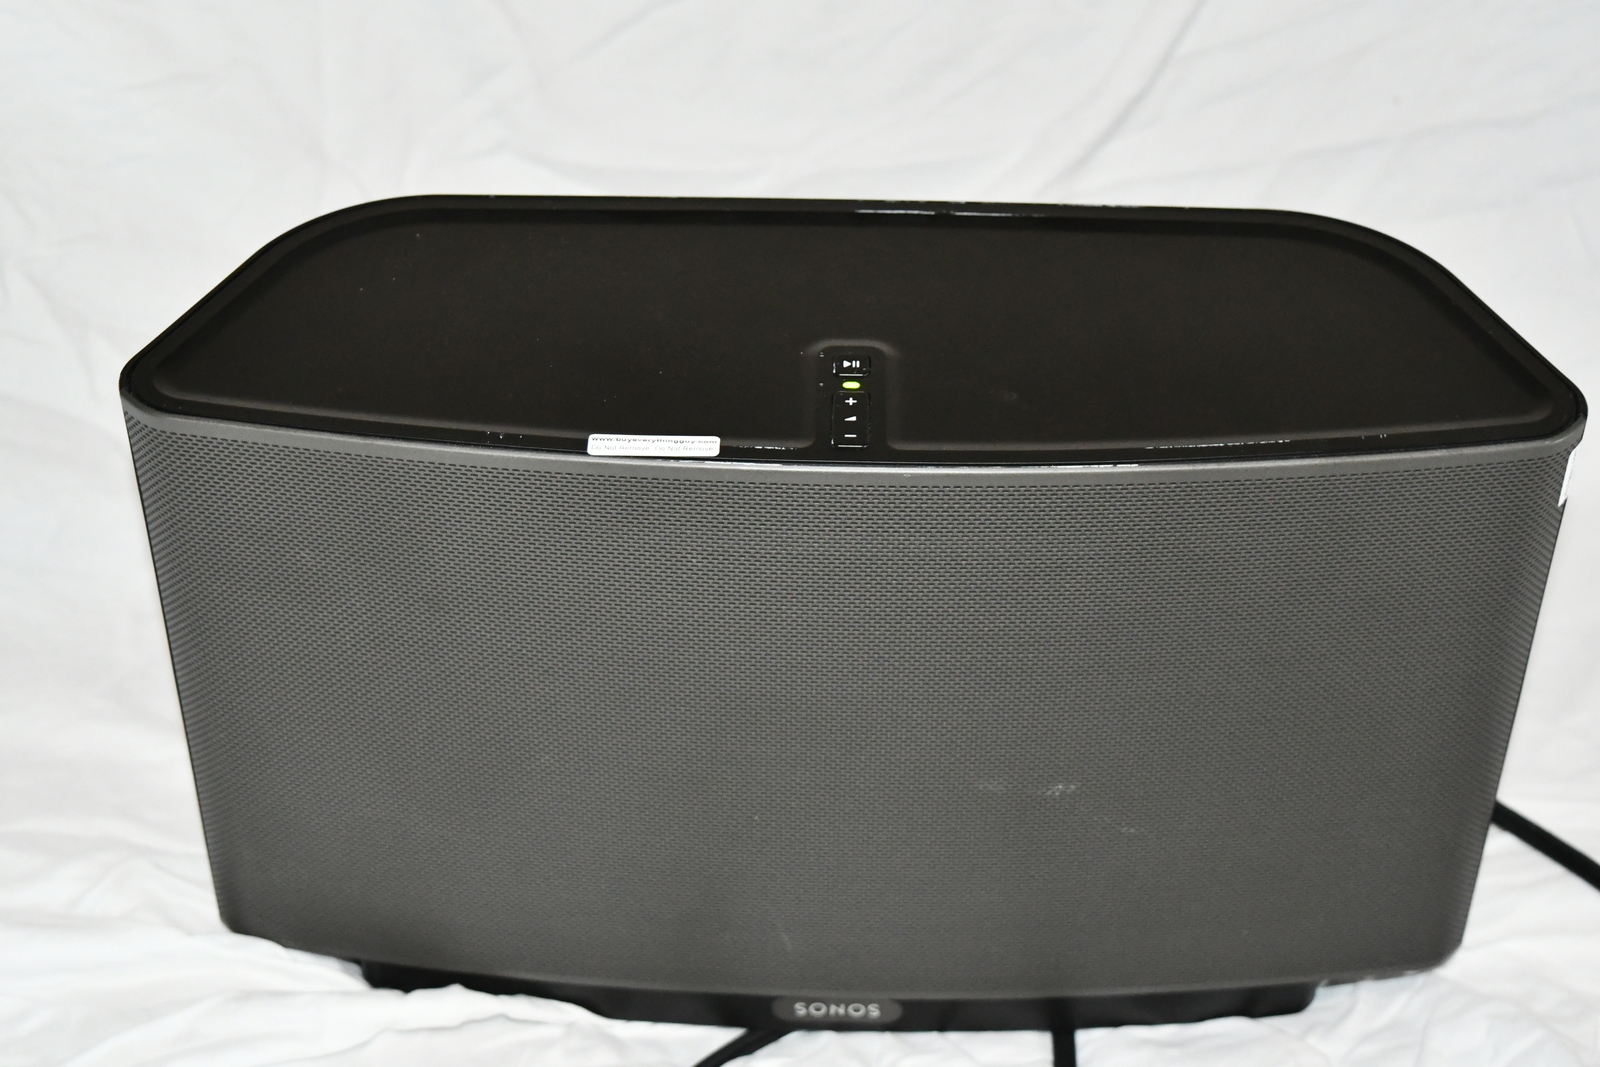 Primary image for Sonos Play:5 Generation 1 Wireless Wifi Multi-Room Speaker - Black 515b2